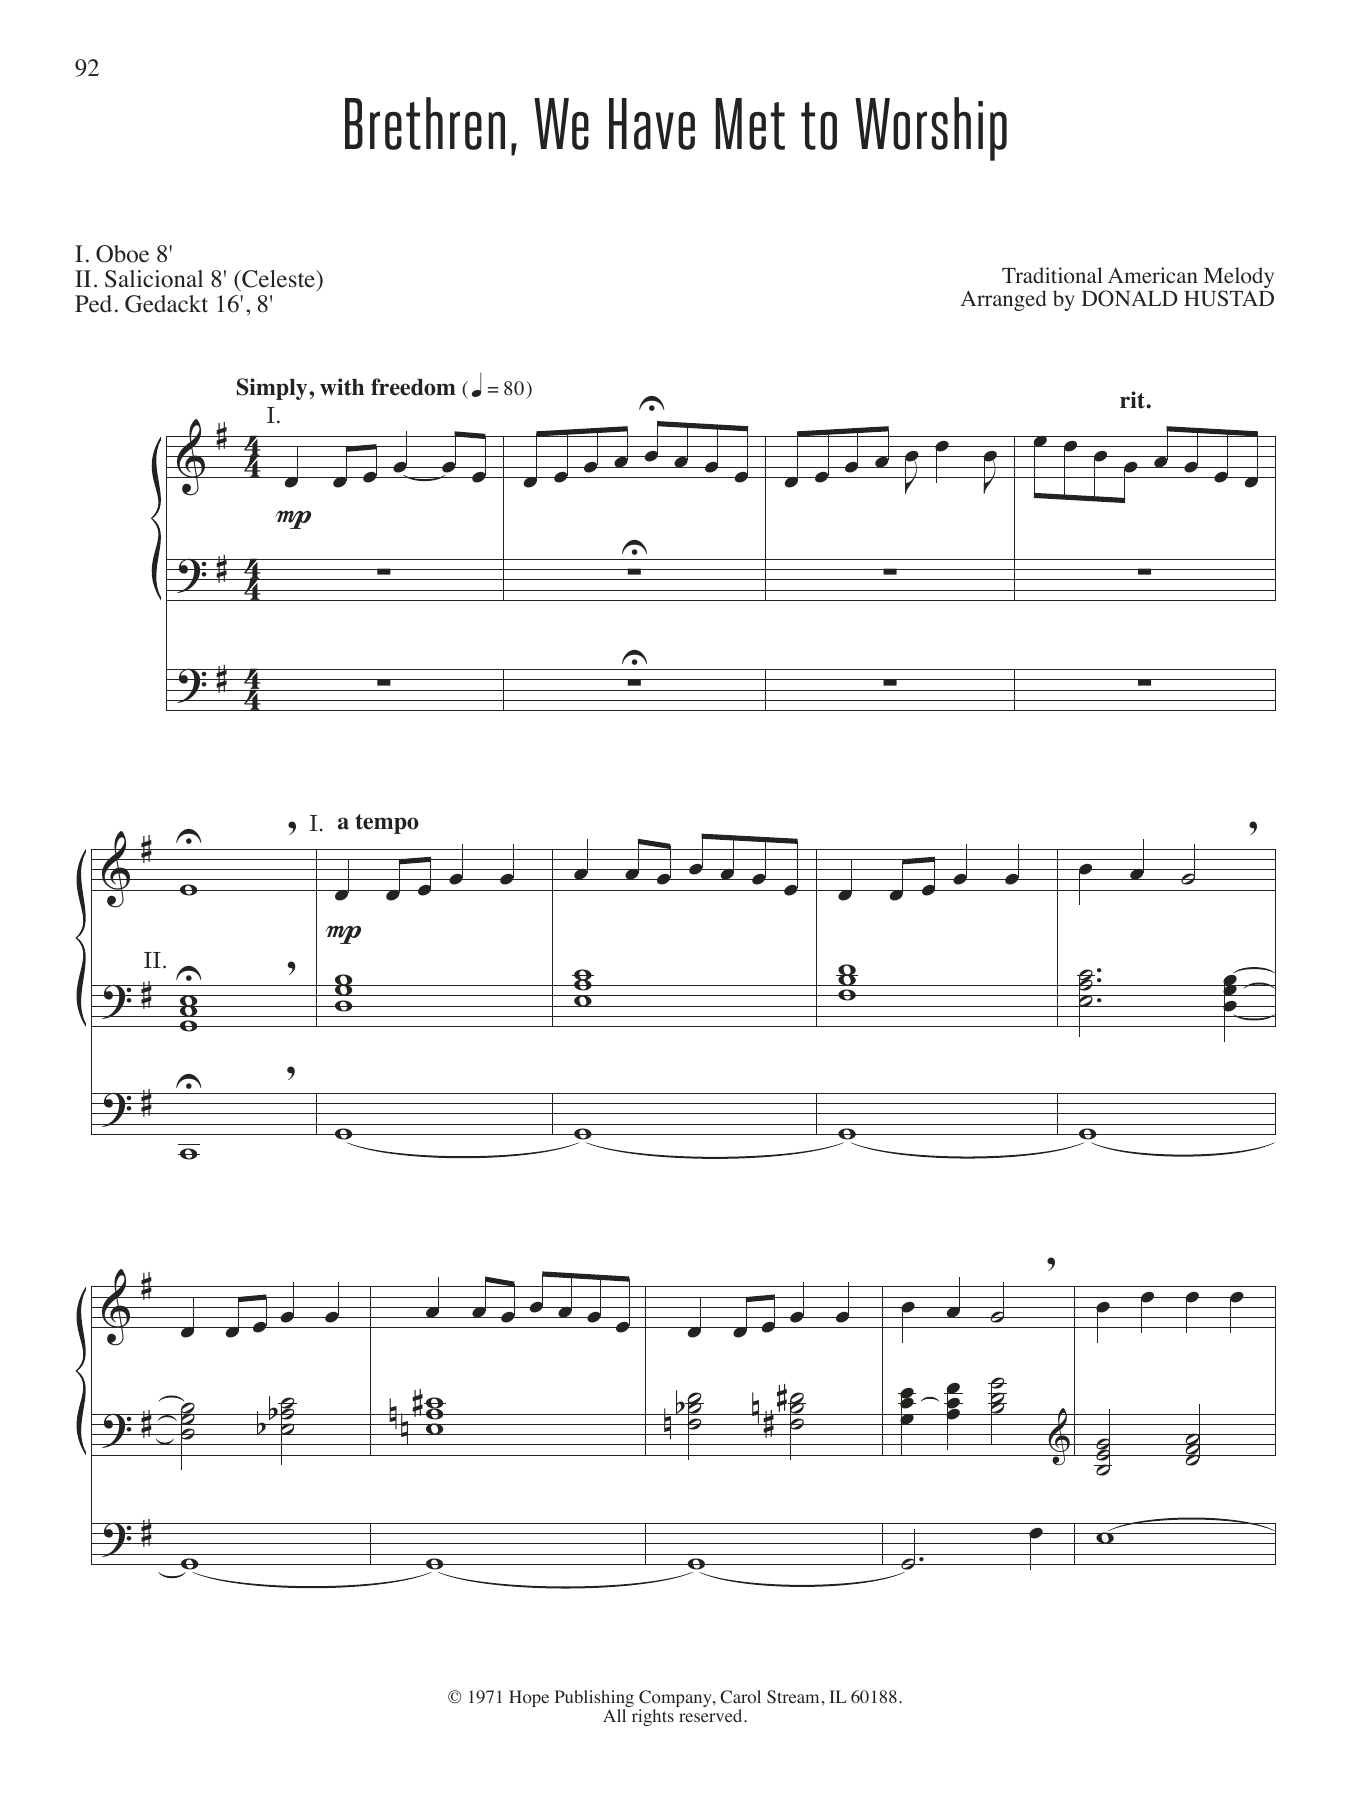 Don Hustad Brethren, we have Met to Worship Sheet Music Notes & Chords for Organ - Download or Print PDF